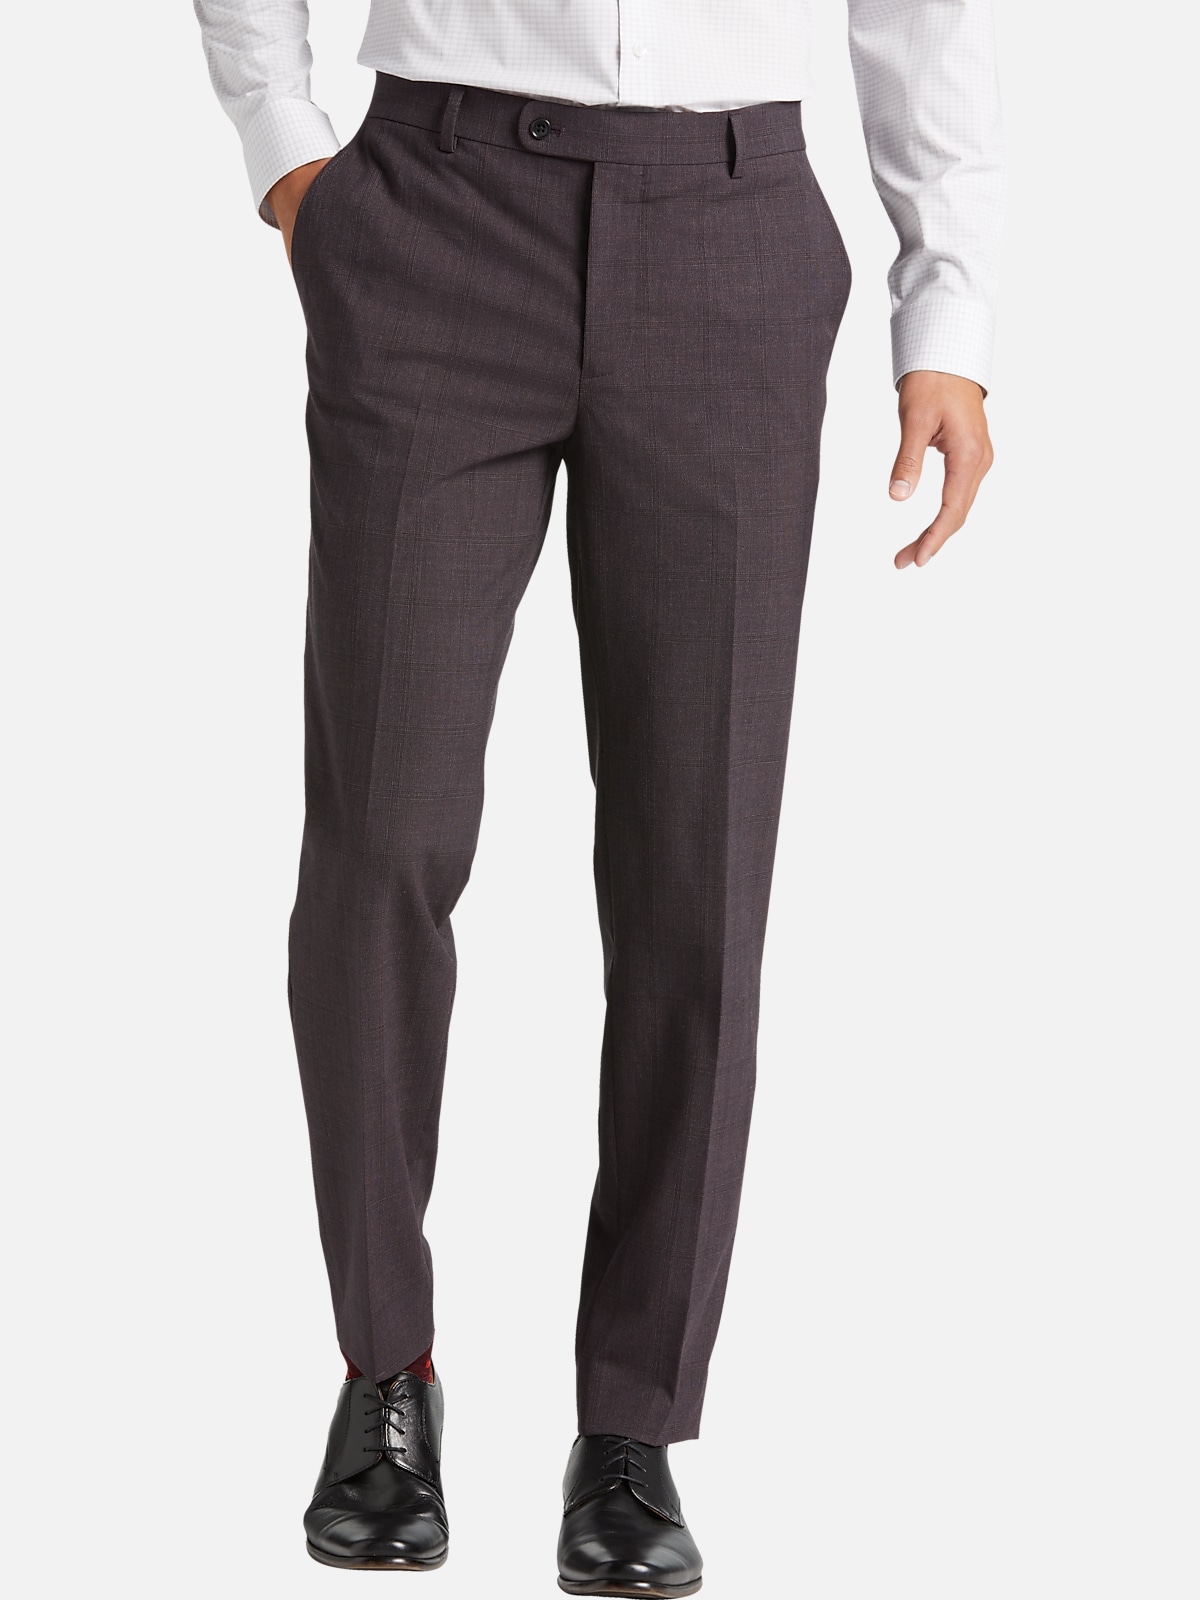 Wilke-Rodriguez Slim Fit Suit Separates Pants | Pants| Men's Wearhouse